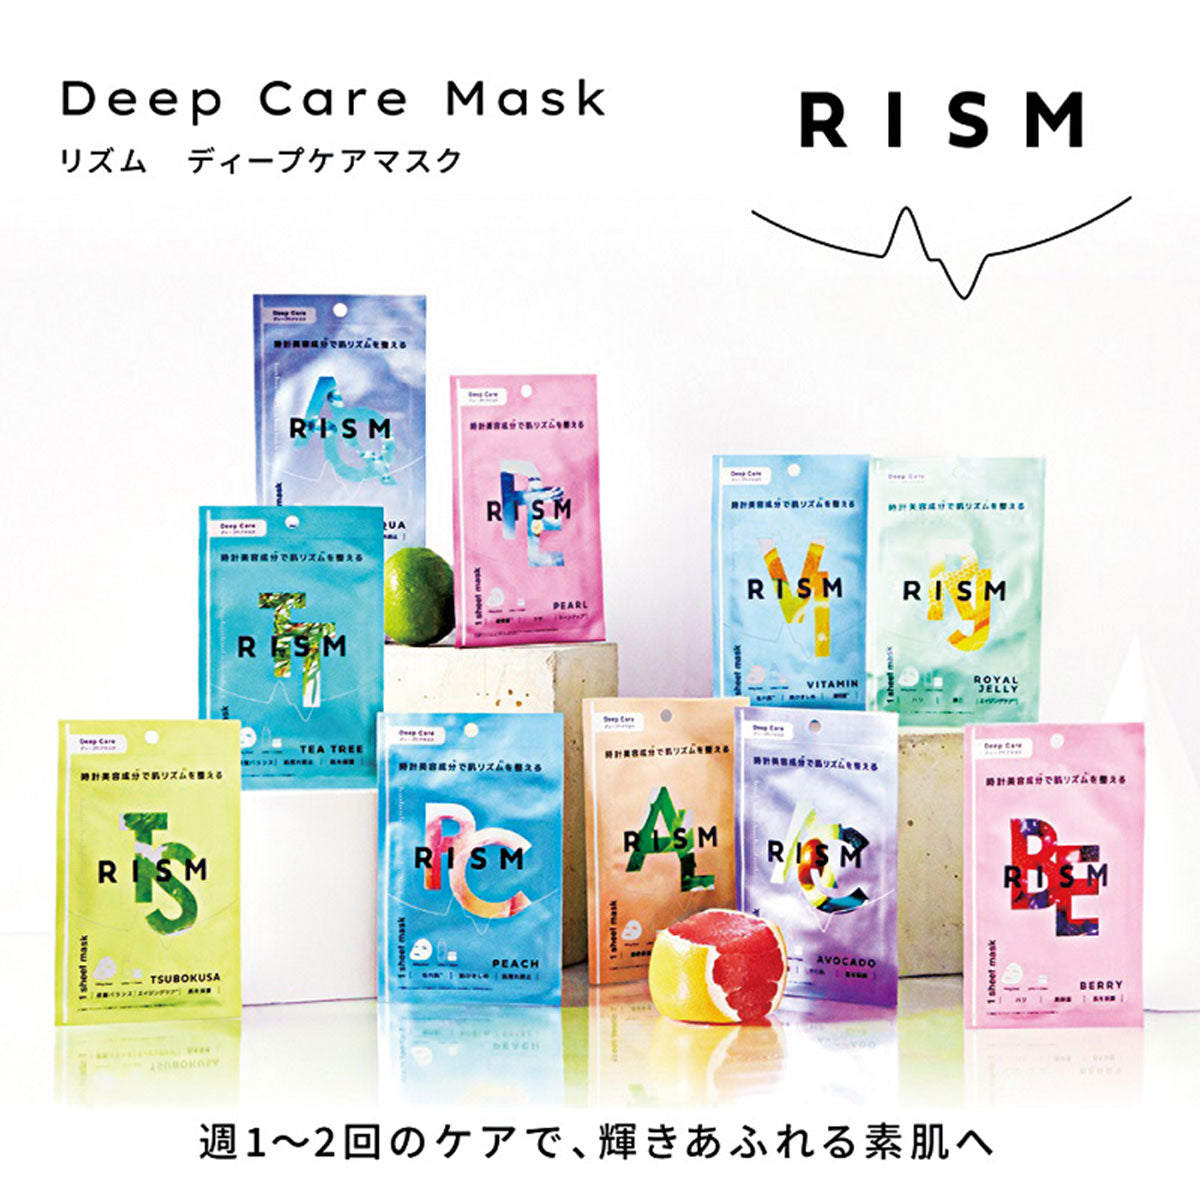 Pc Deep Care Mask Peach #Pore Care 1 Sheet